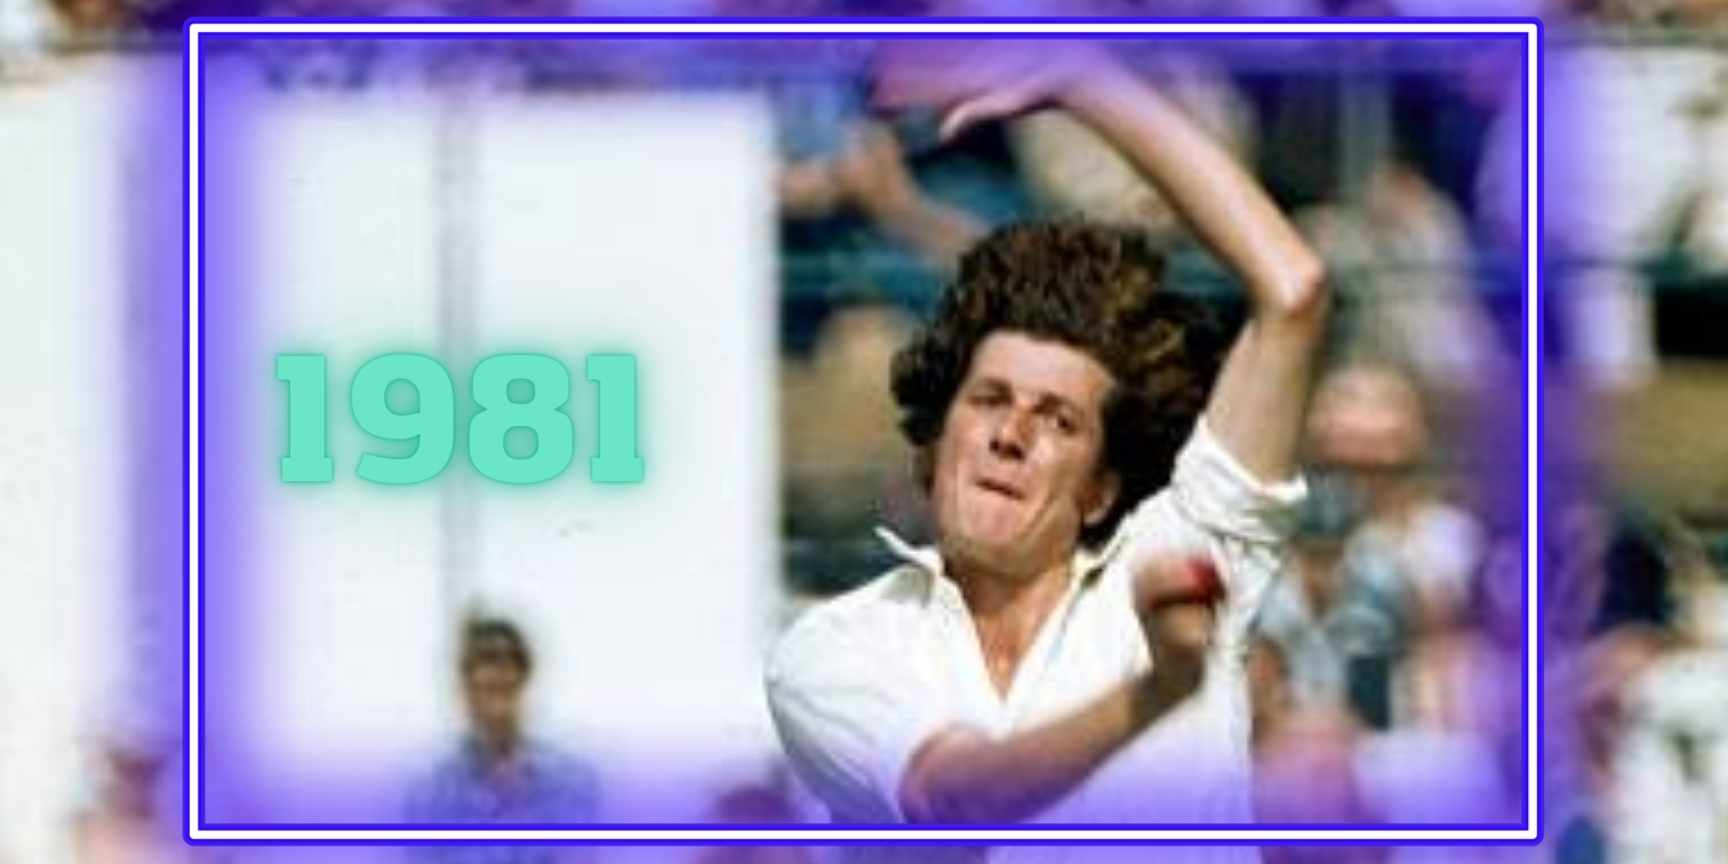 1981 cricket player